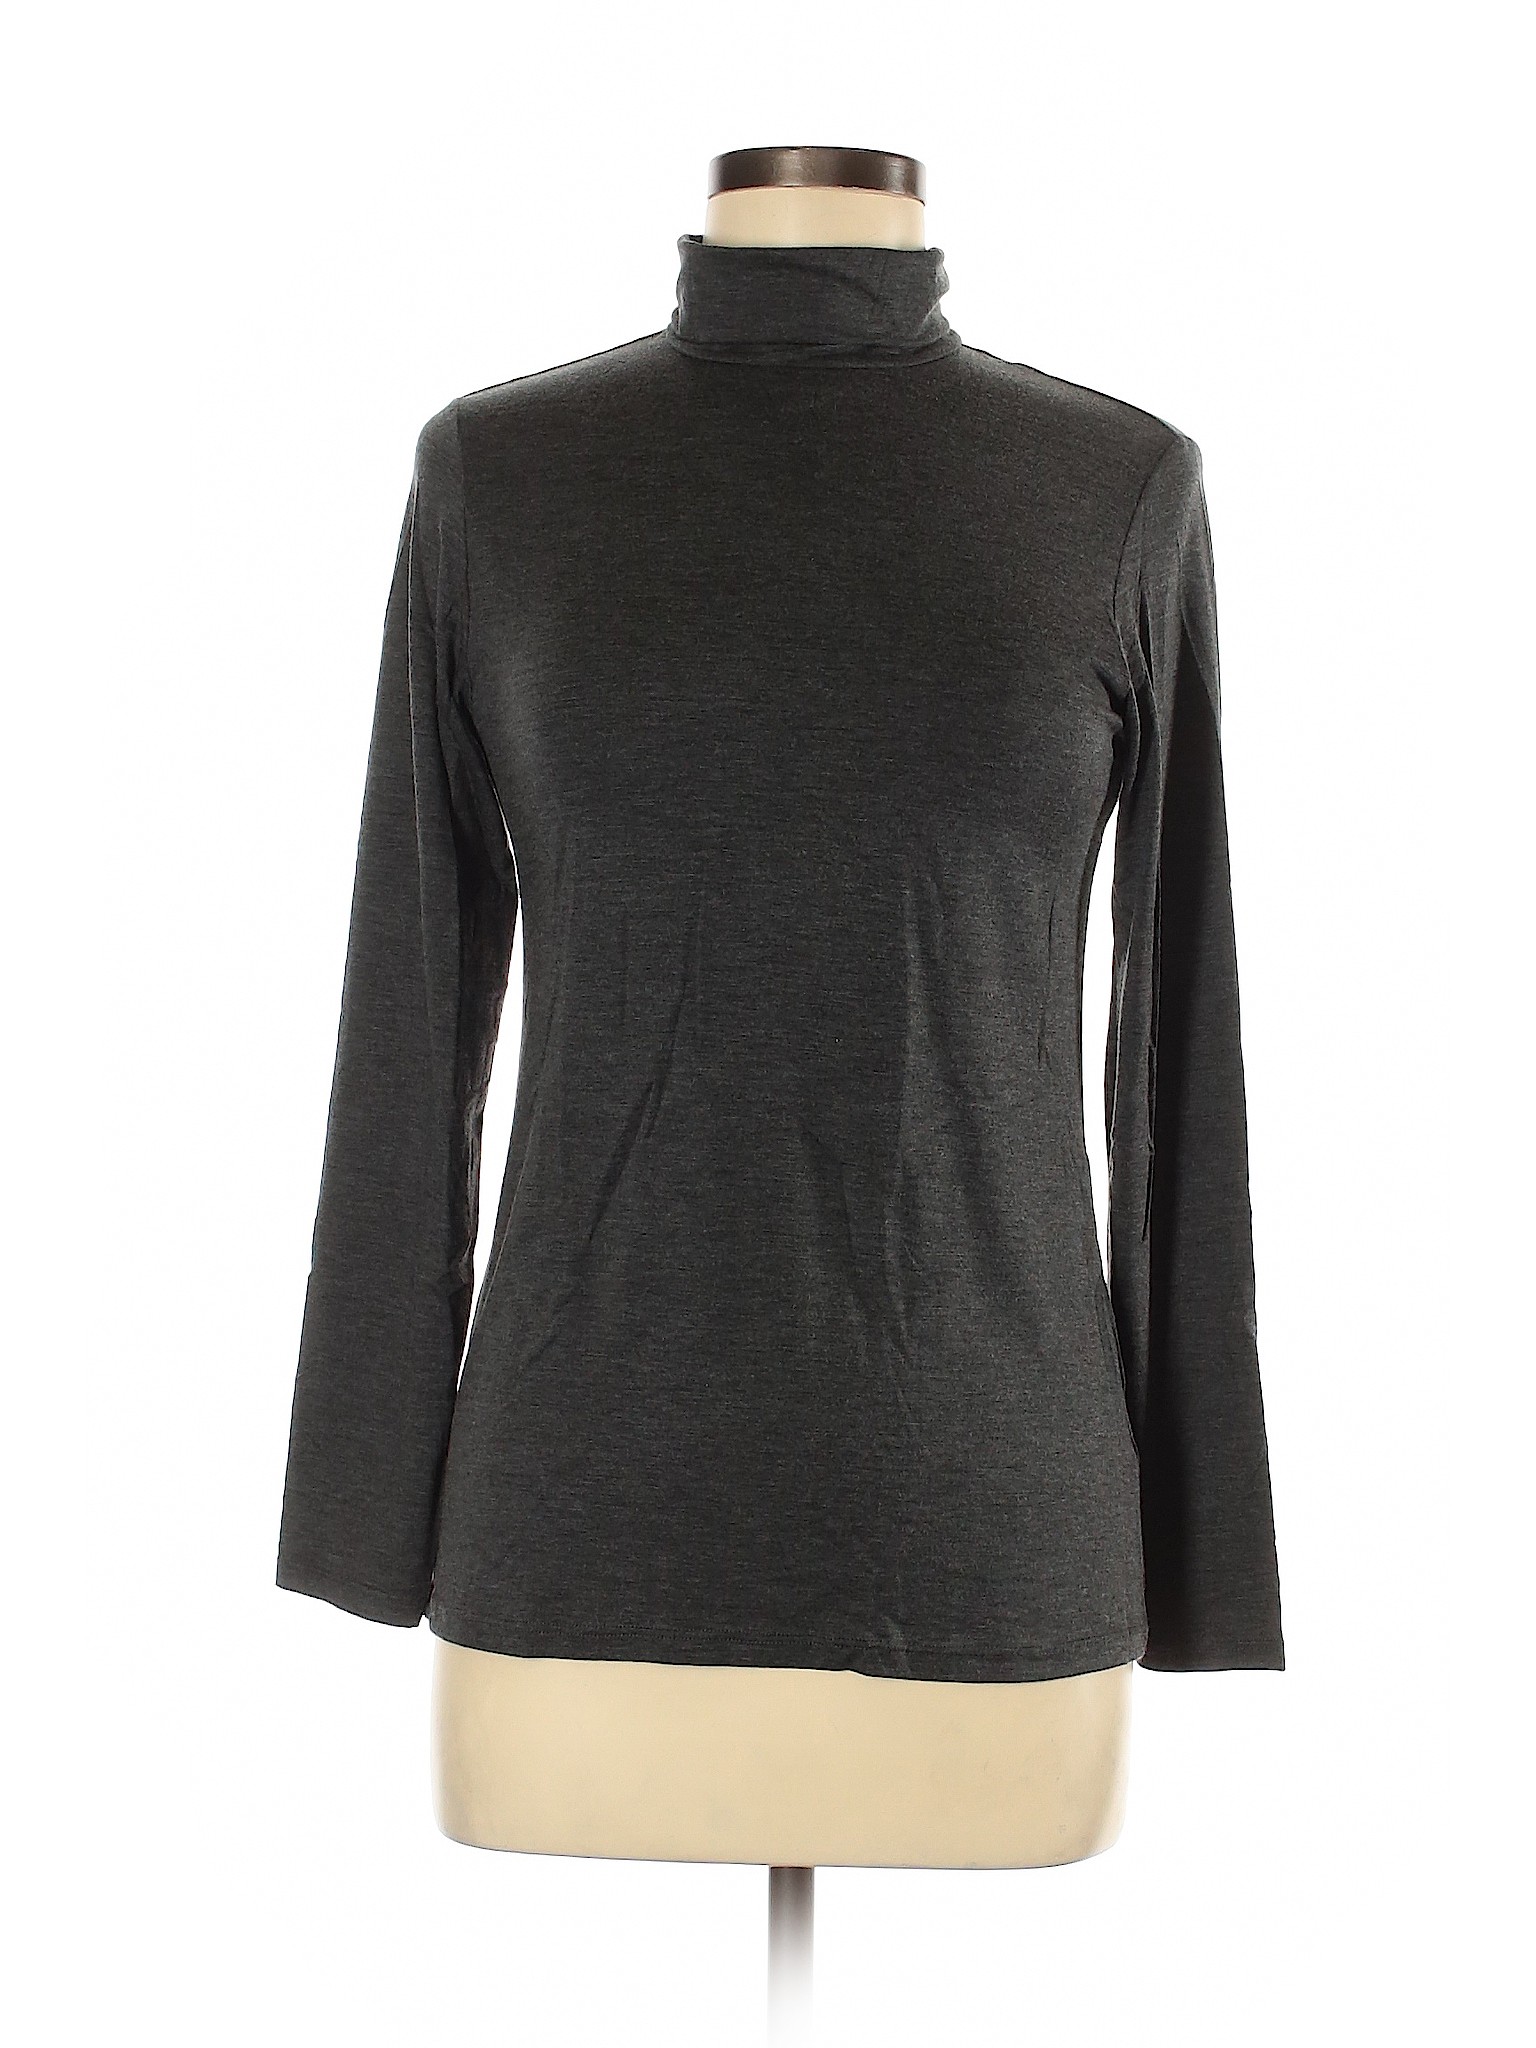 Uniqlo Women Gray Turtleneck Sweater L | eBay